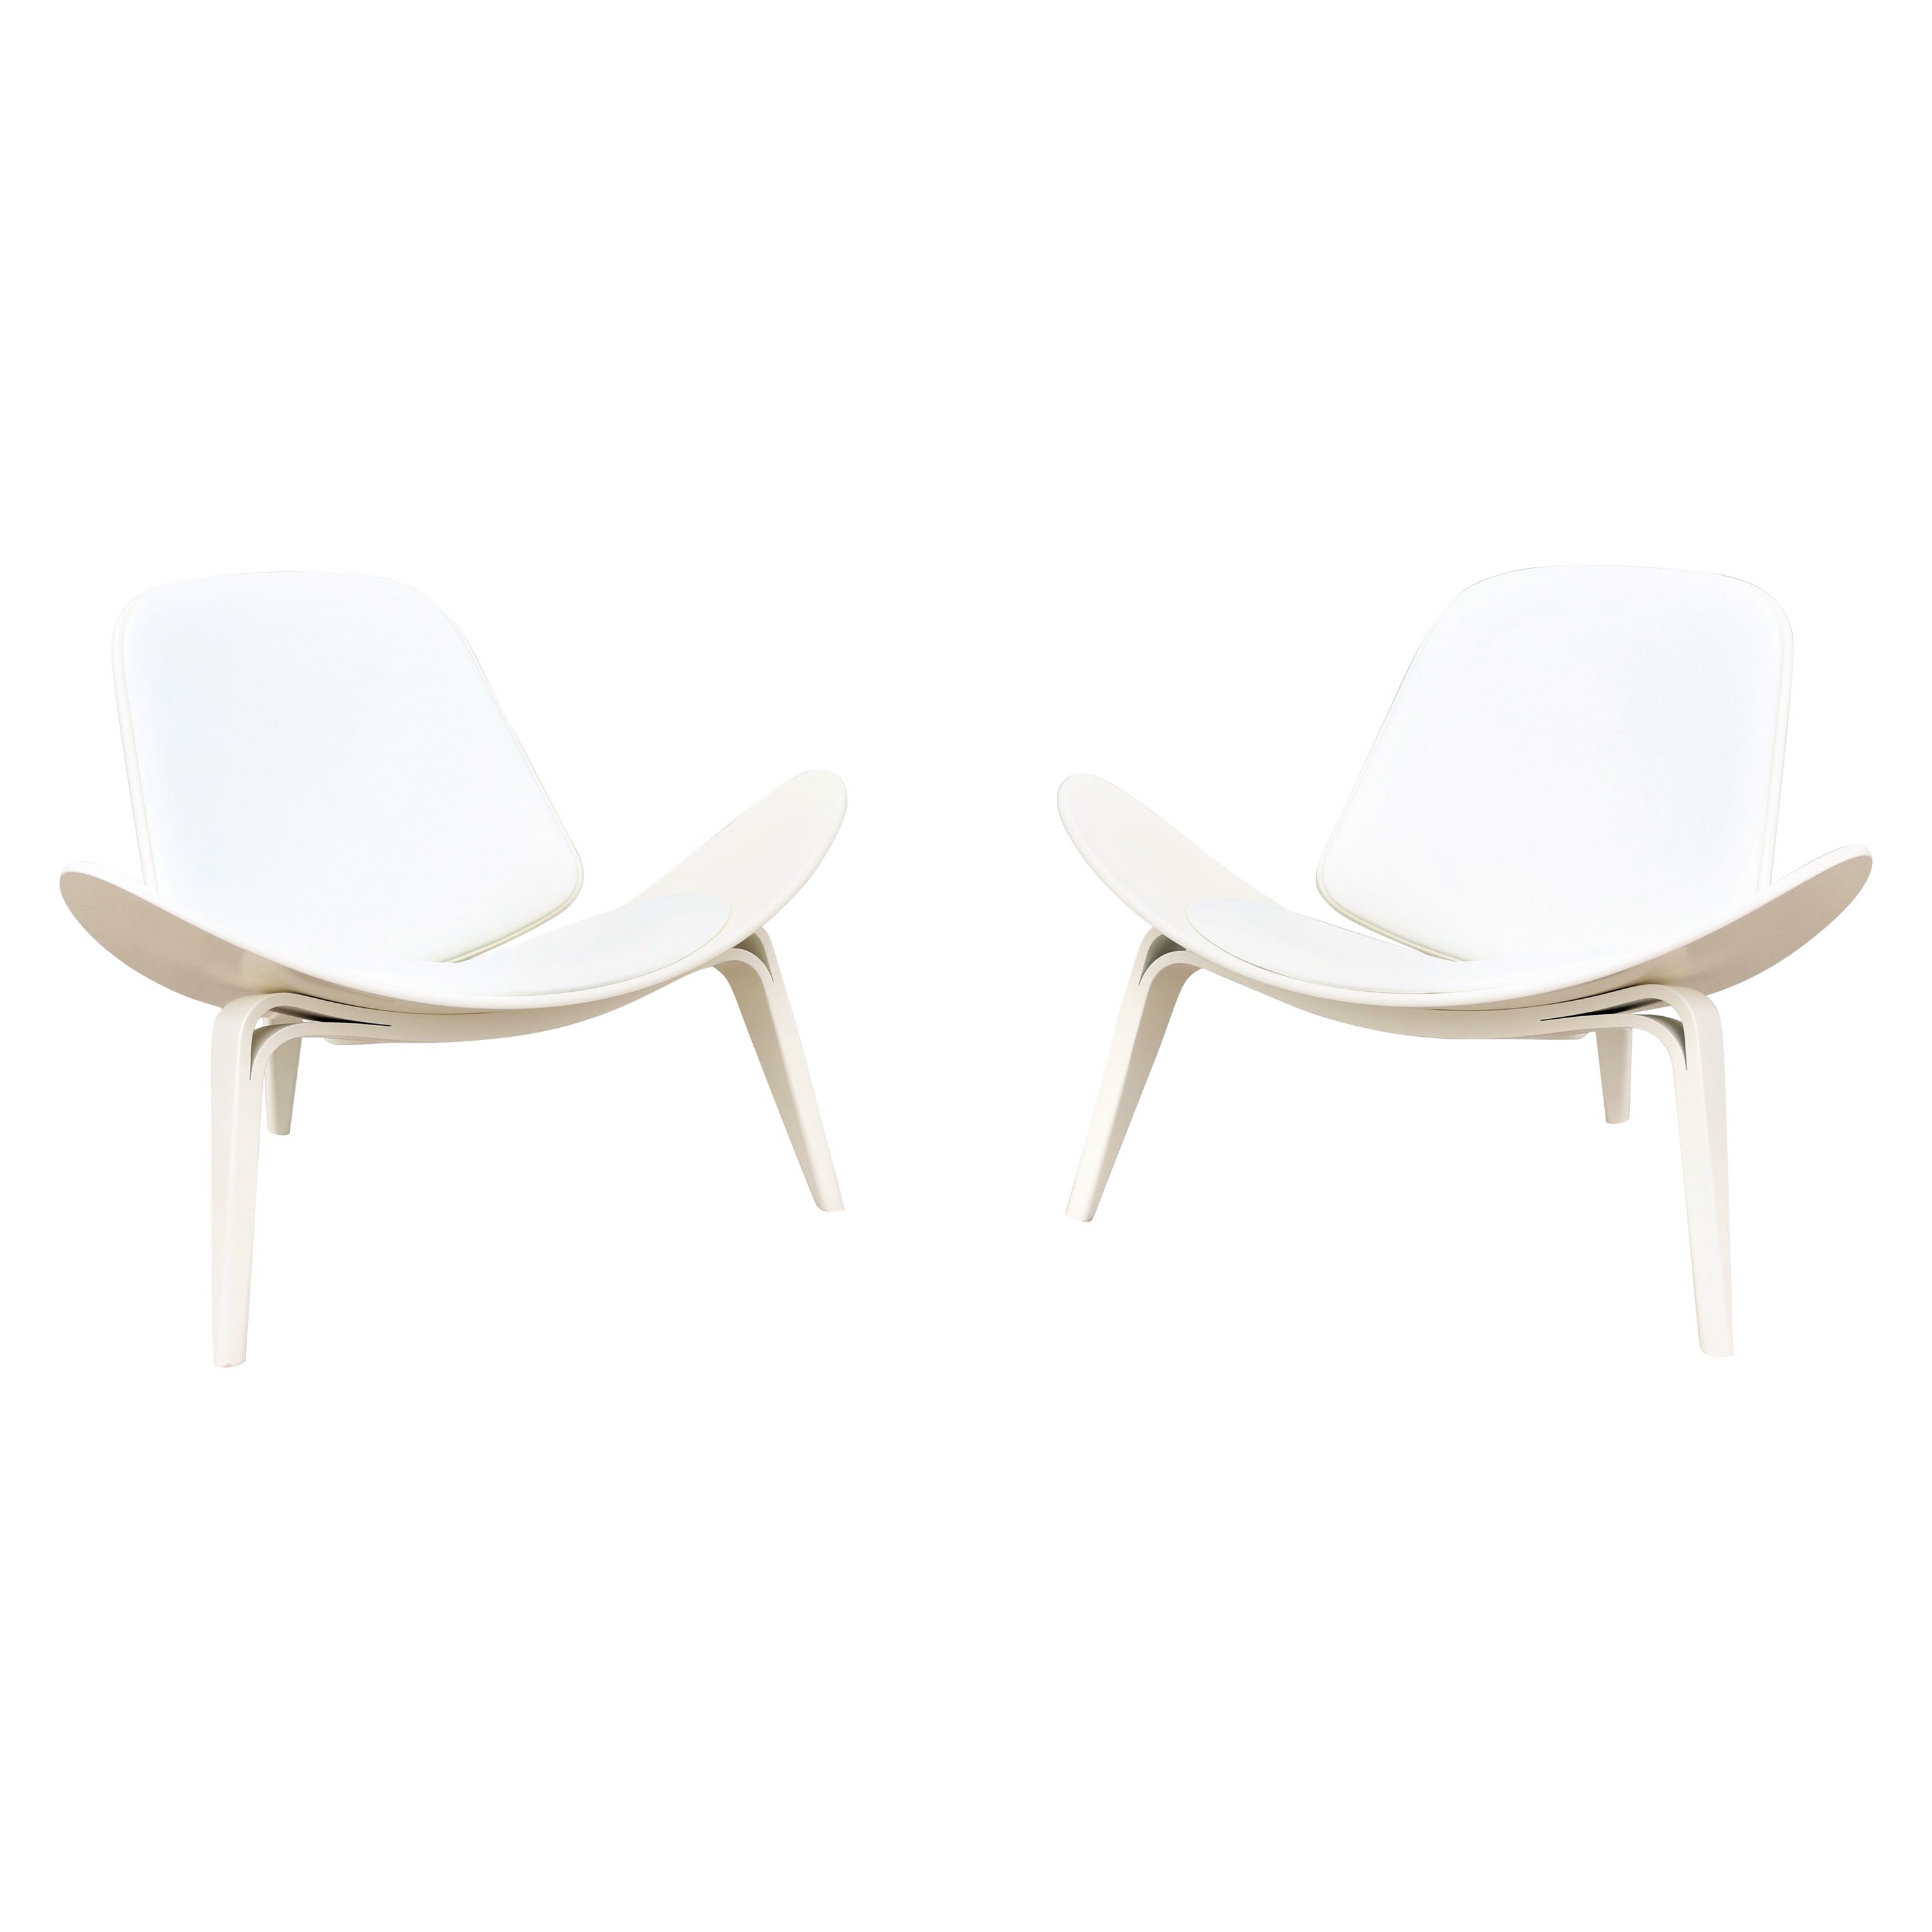 Danish Mid-Century Modern Hans J. Wegner for Carl Hansen CH07 Shell Chair a Pair For Sale